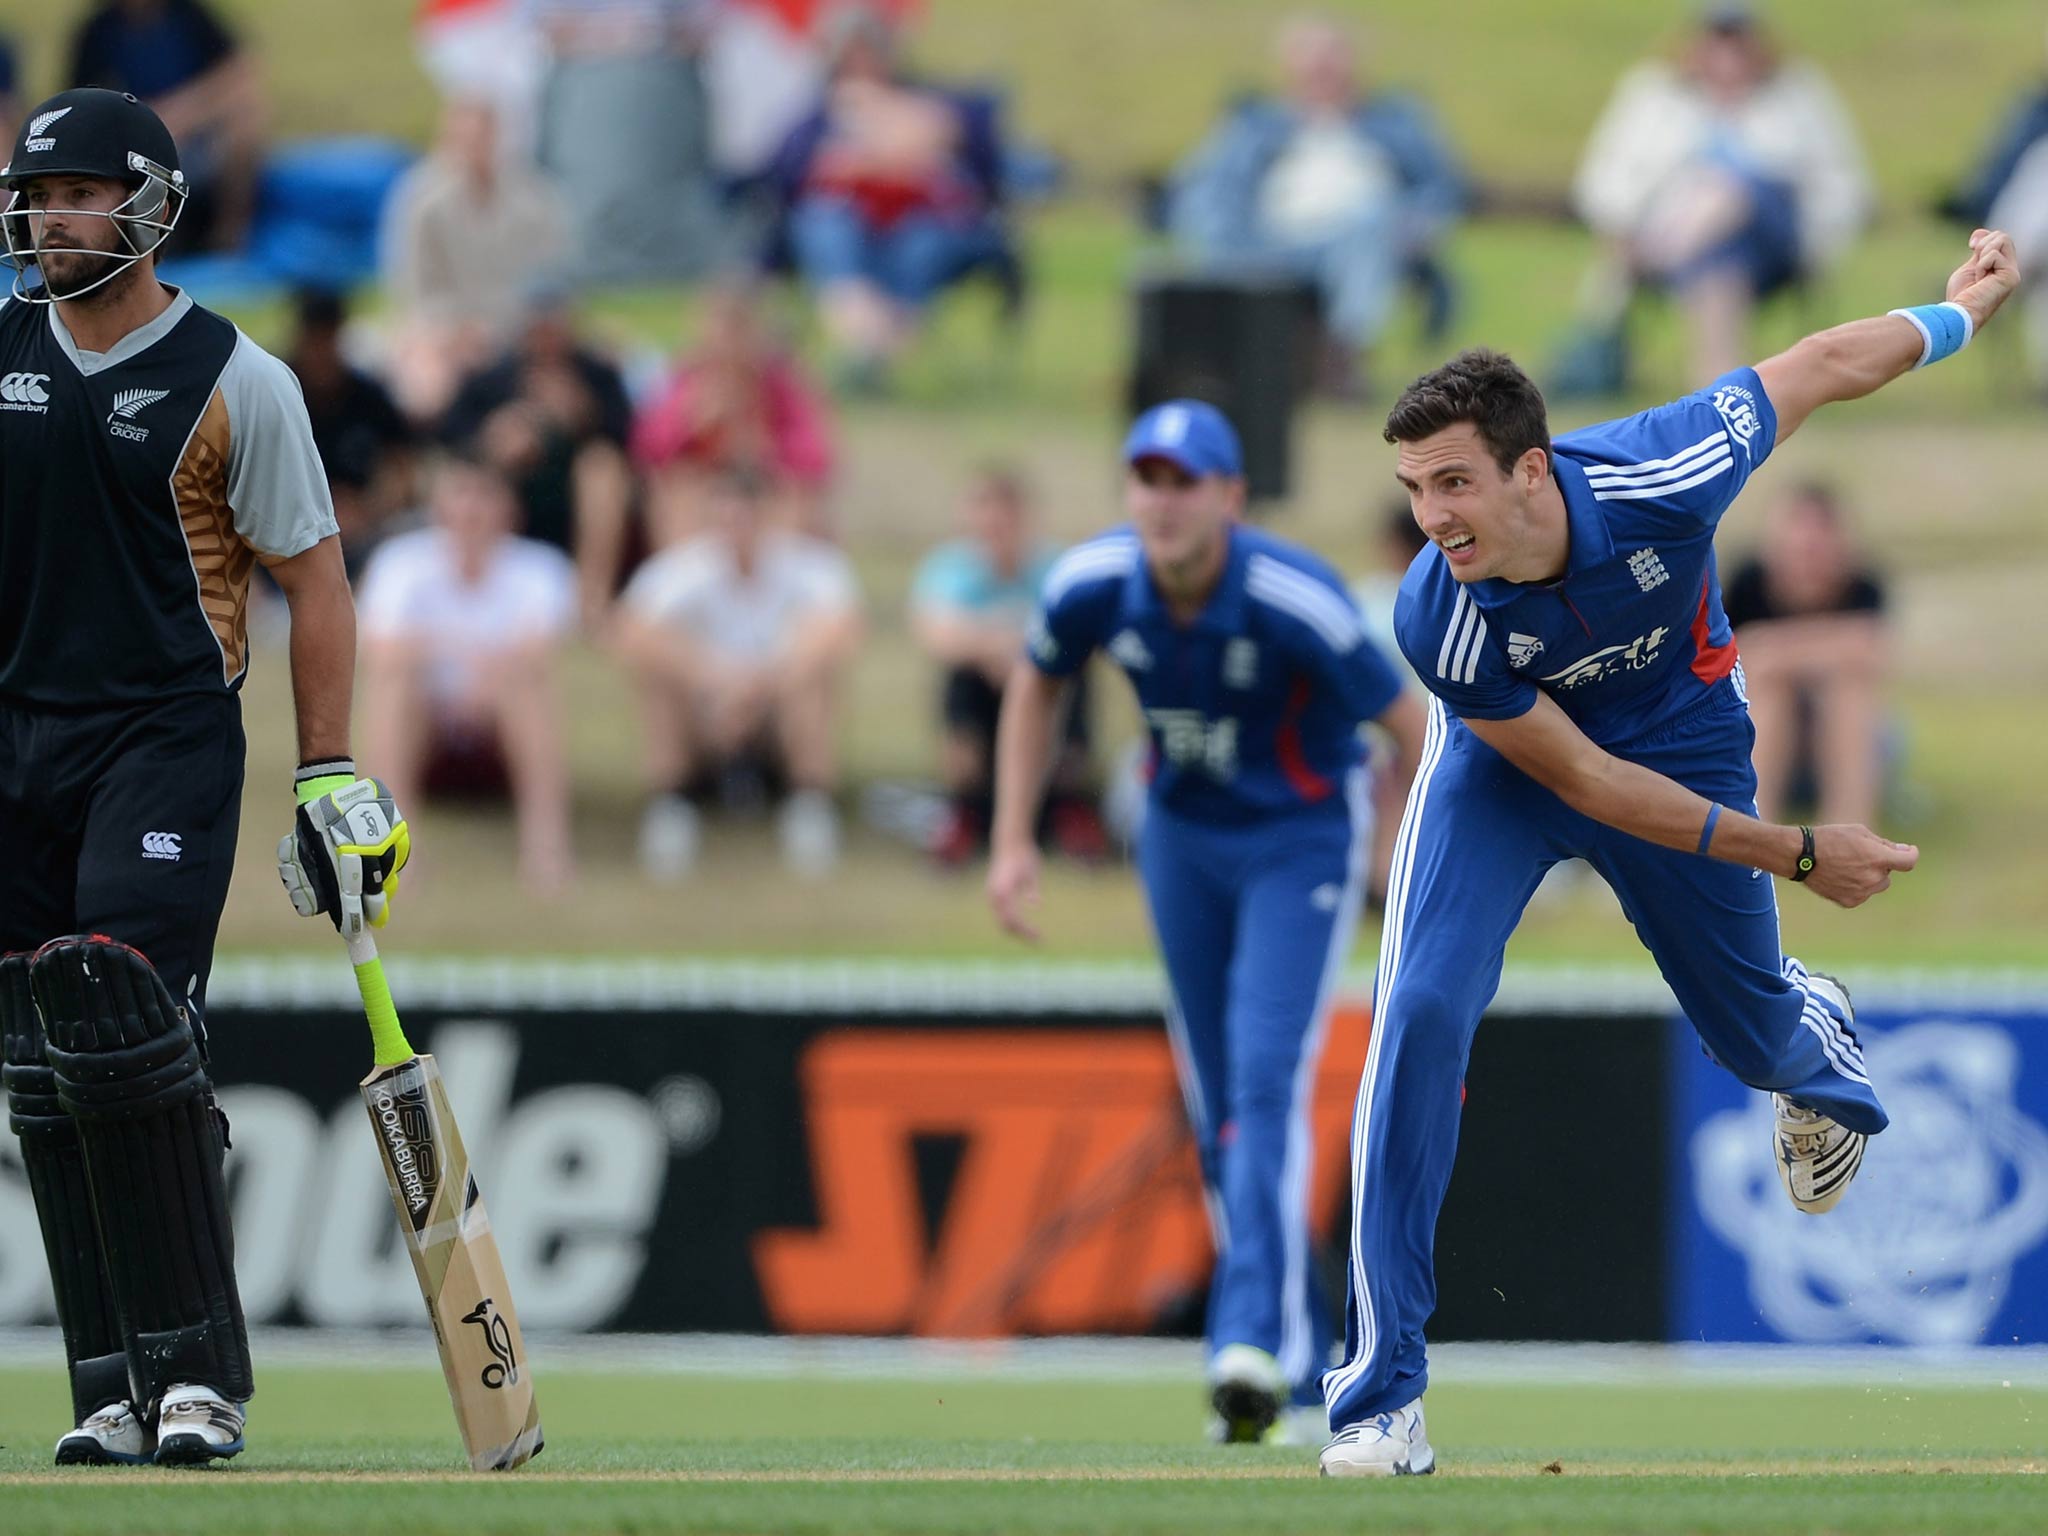 Steven Finn of England bowls during a T20 Practice Match against a New Zealand XI